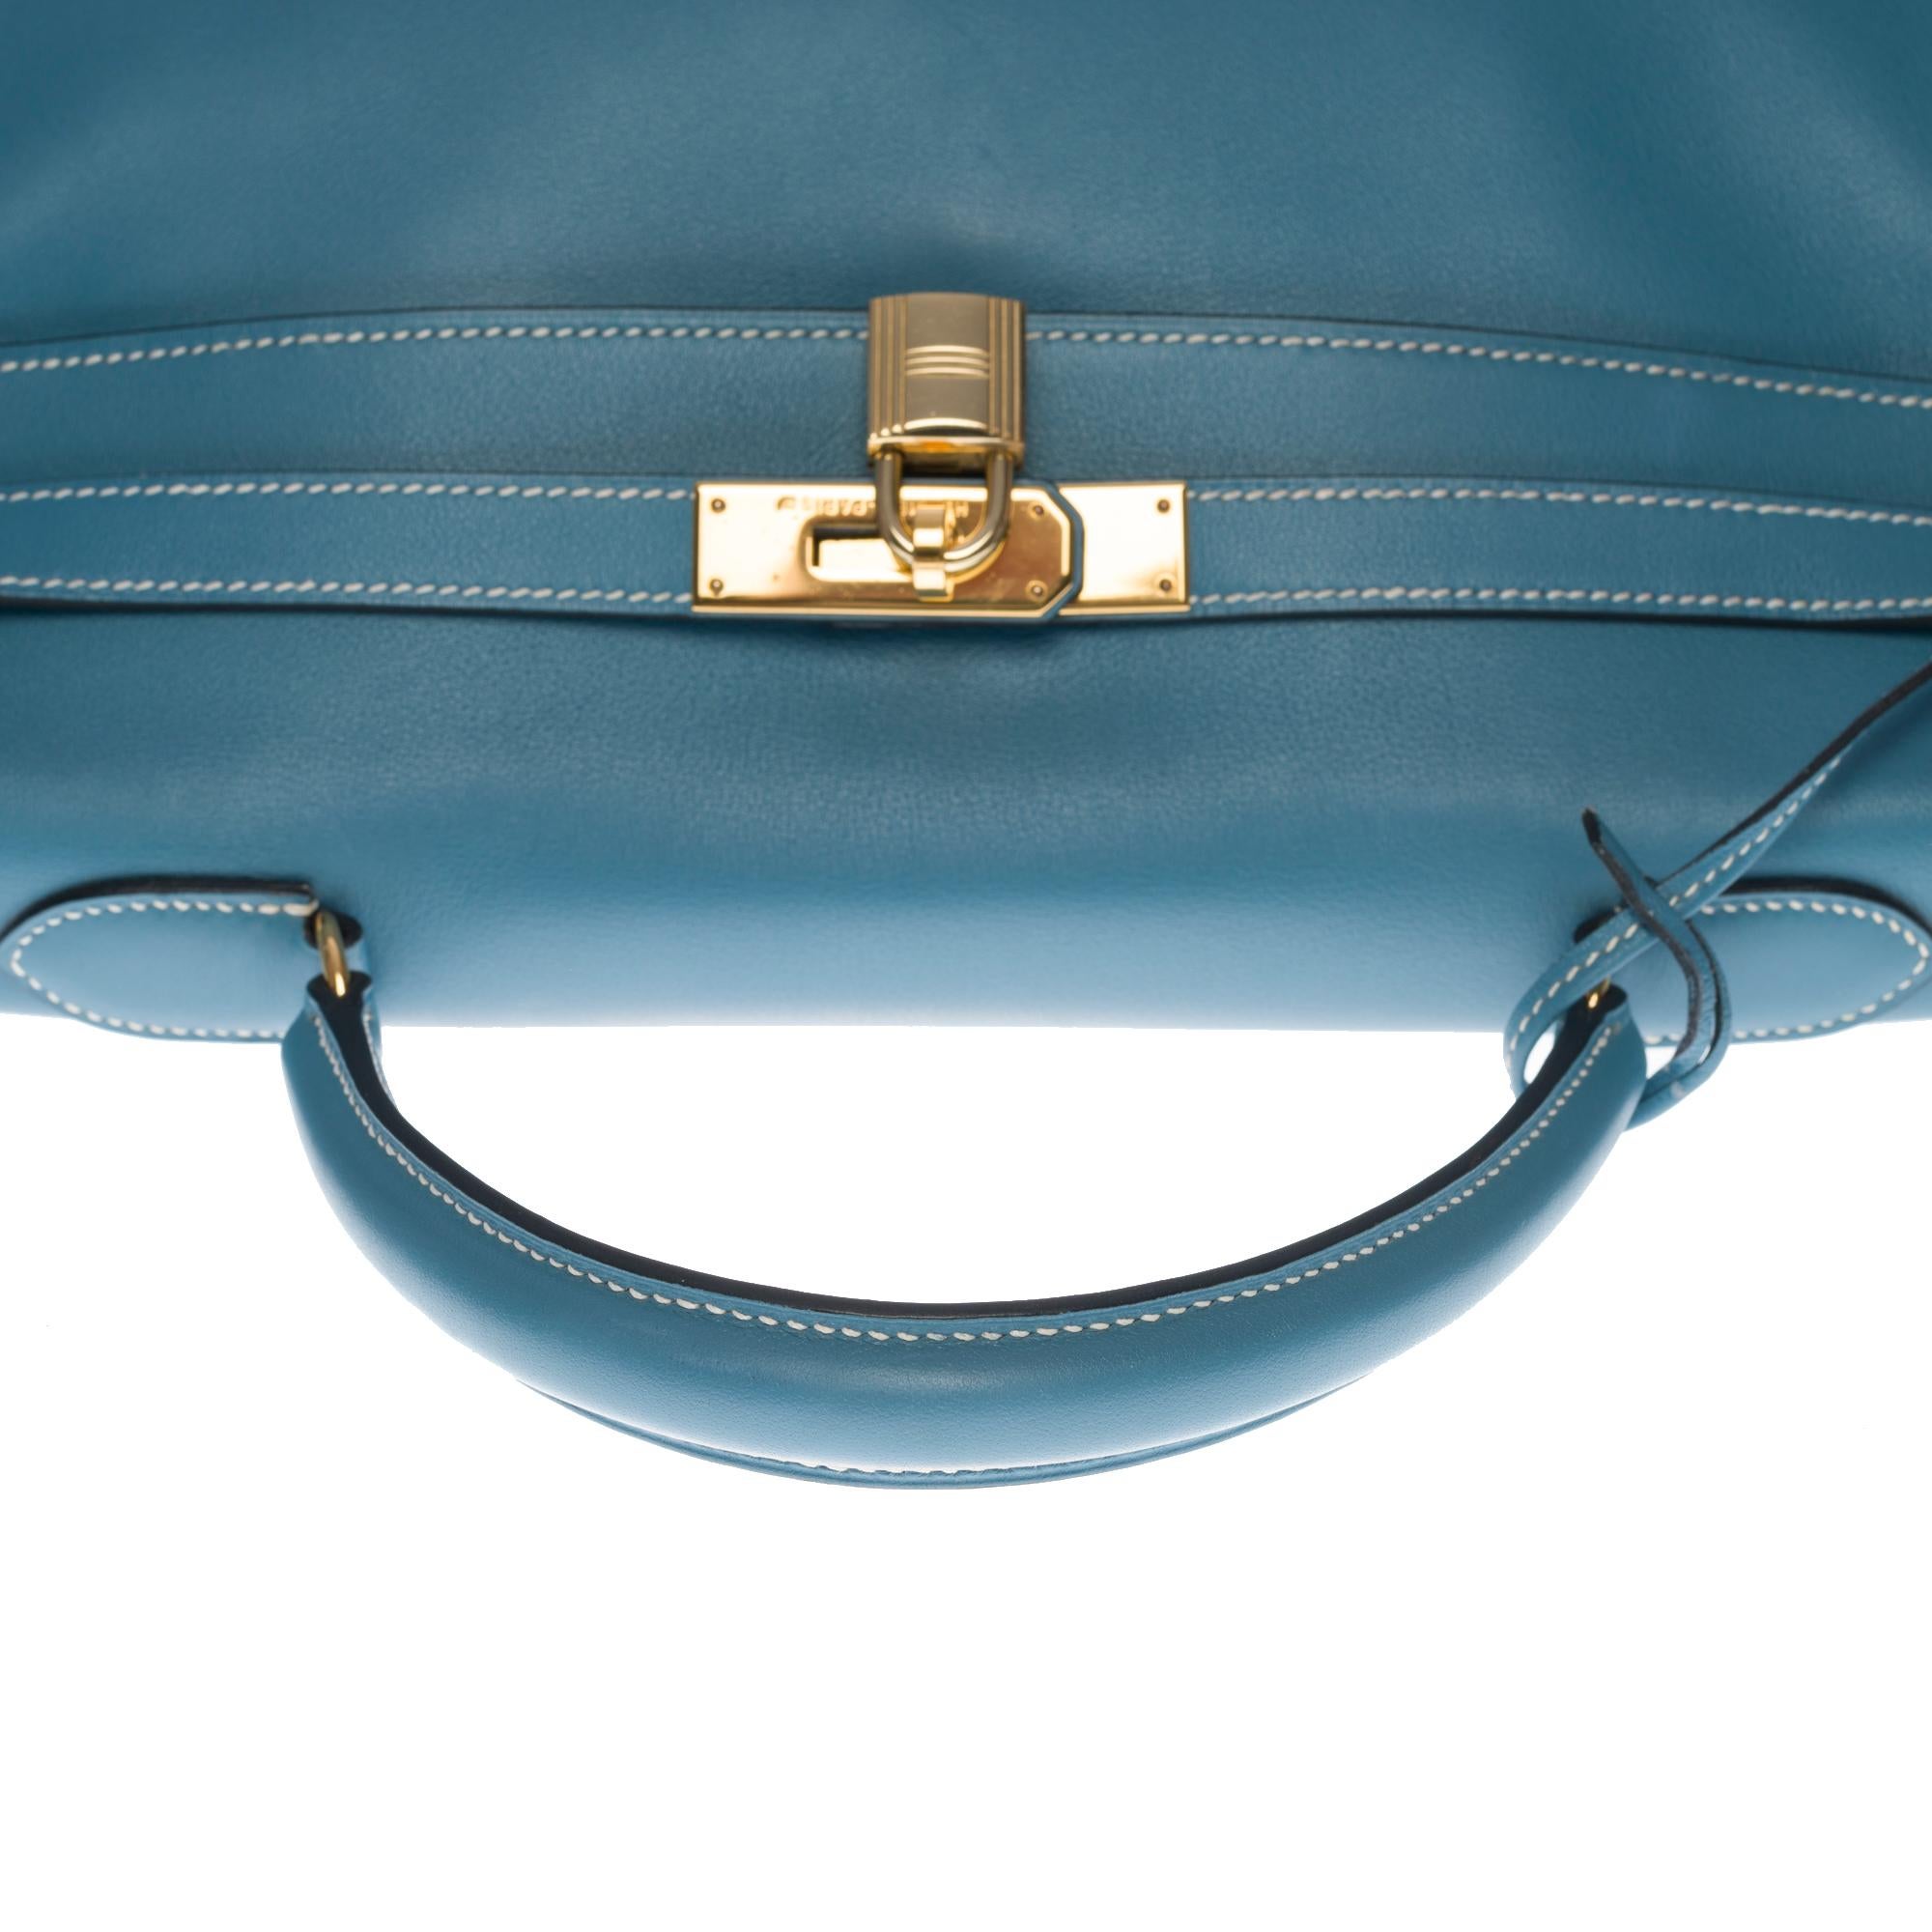 Women's or Men's Gorgeous Hermès Kelly 35 retourné handbag strap in blue jeans Swift leather, GHW